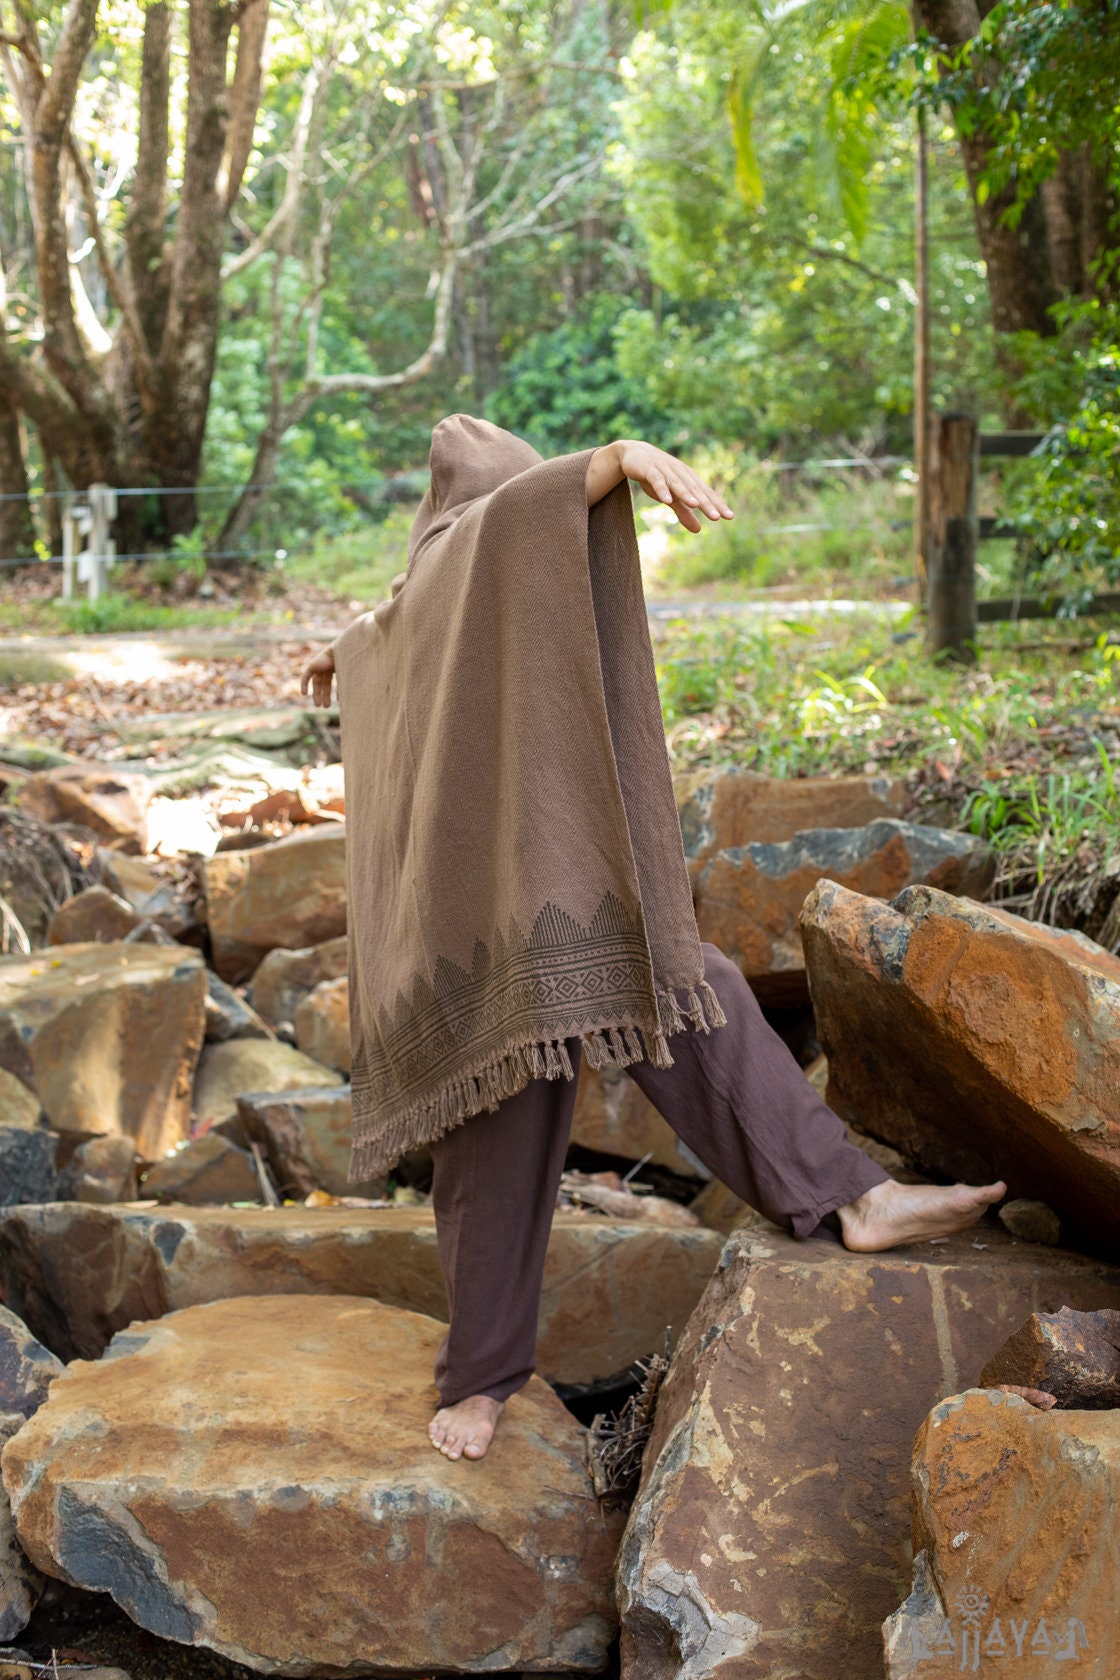 ANAGAMI Brown Hooded Kimono Cape Poncho Robe Block Printed Natural Dyed Ceremony Ritual Shaman Tribal Alchemy Sacred Shawl Wrap Rave AJJAYA